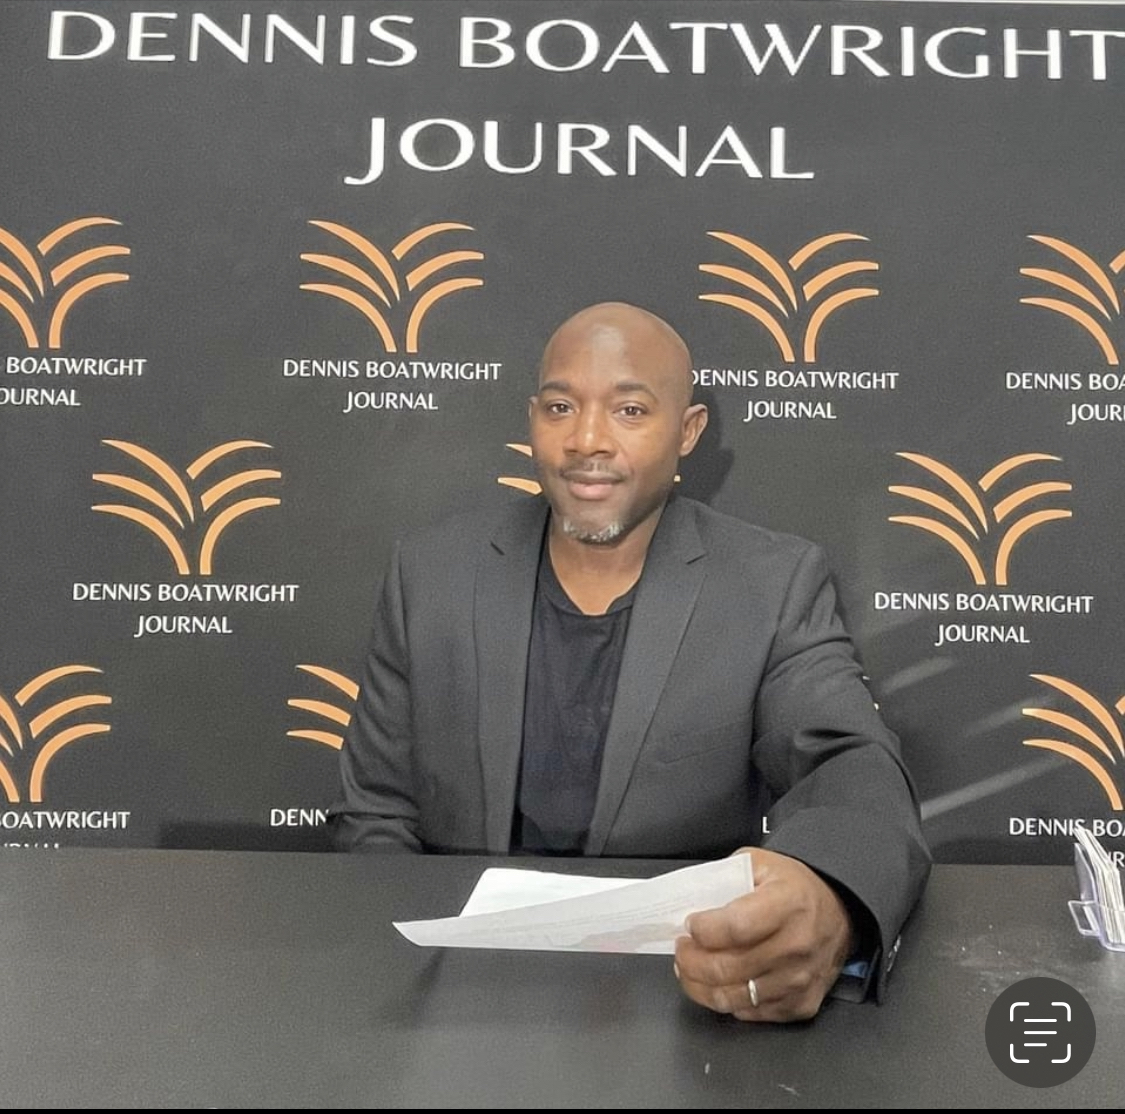 Me Dennis boatwright journal